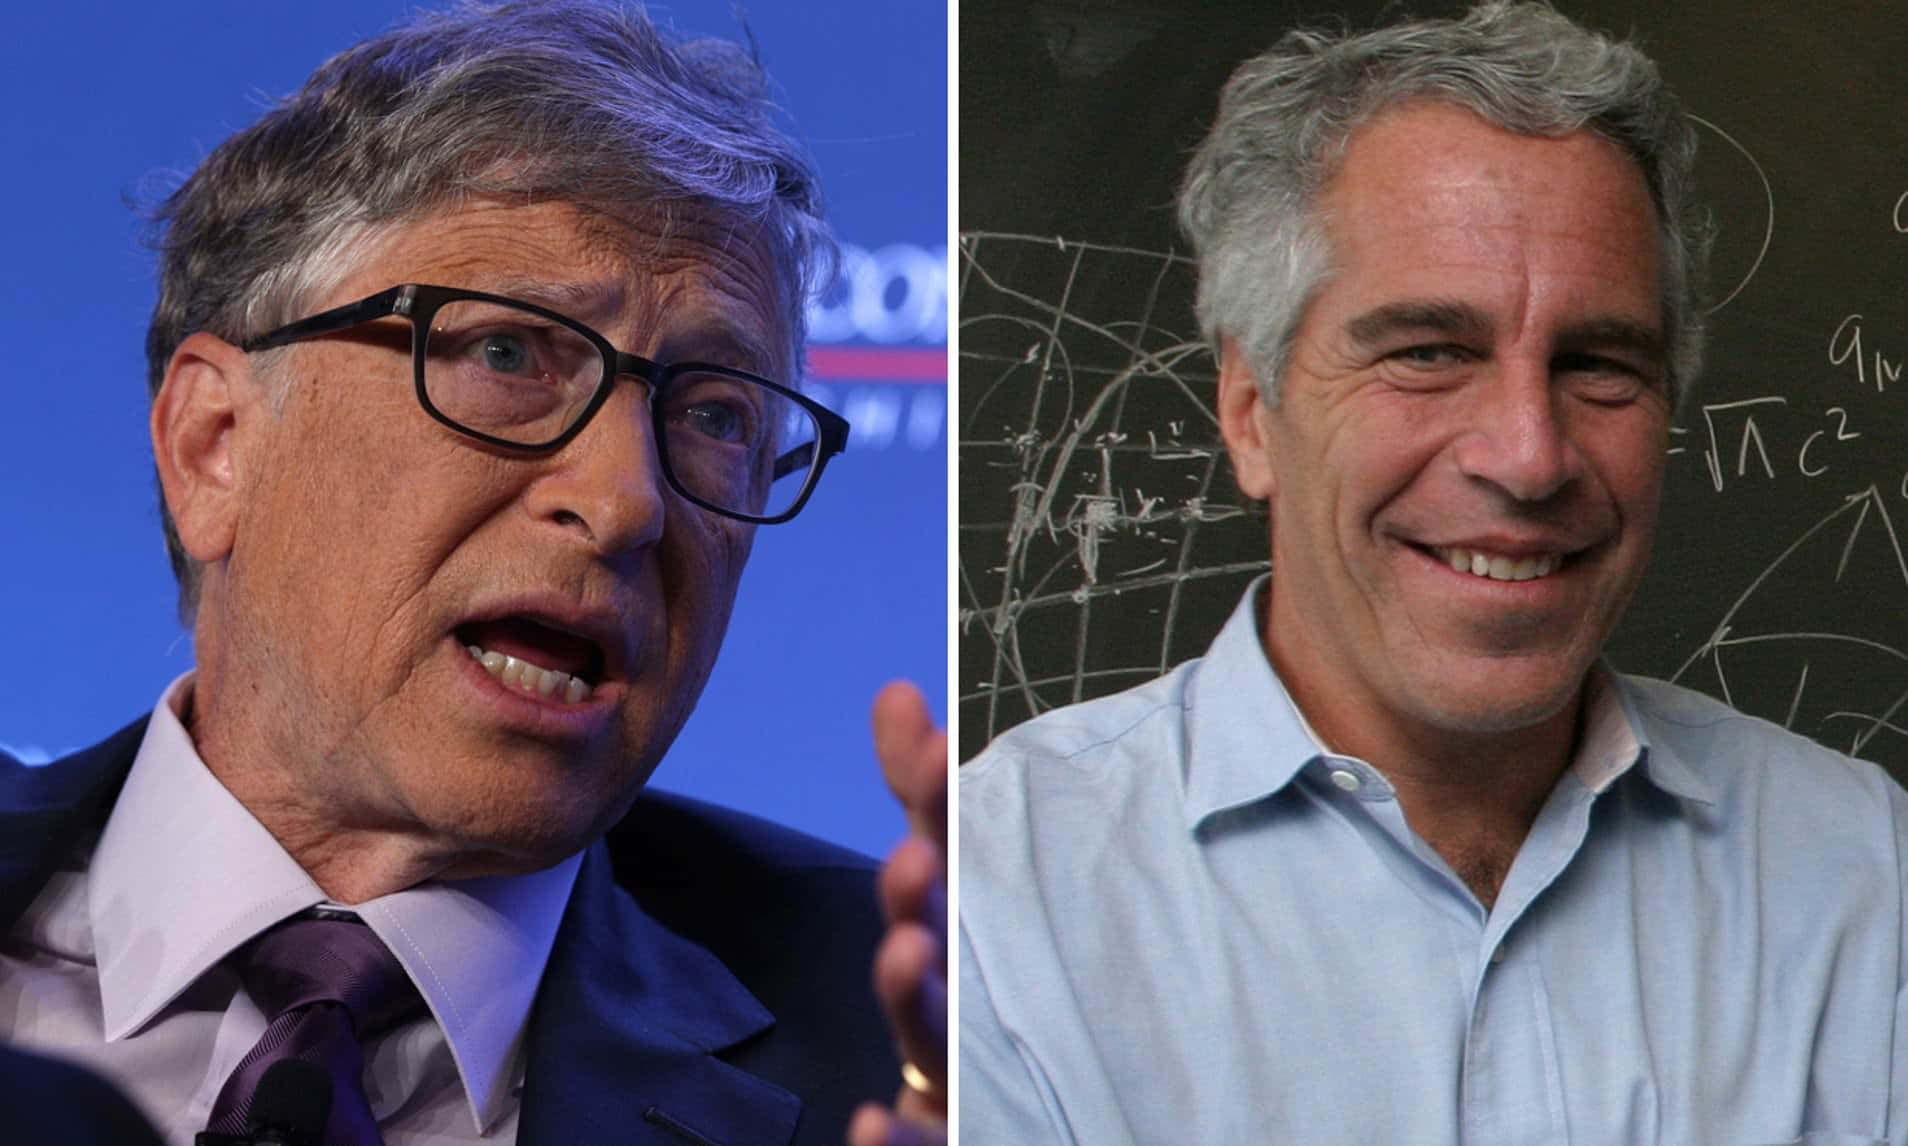 Bill Gates and Jeffrey Epstein, former acquaintances